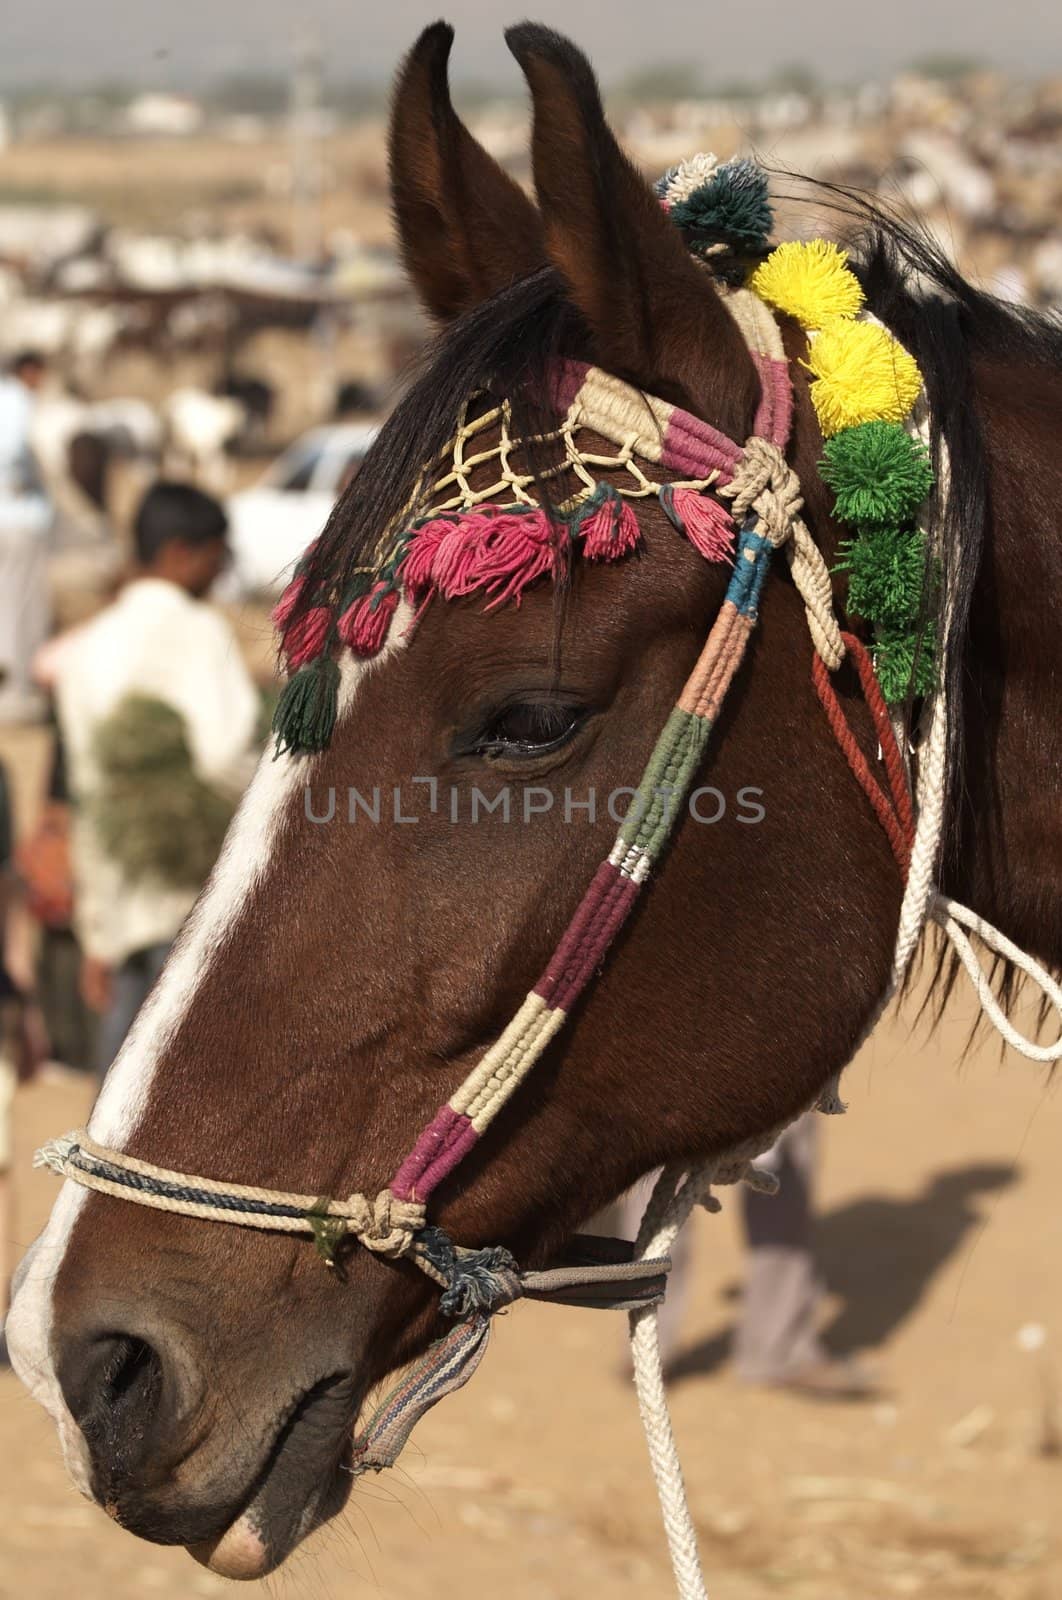 Marwari horse for sale at the Pushkar Camel Fair in Rajasthan, India